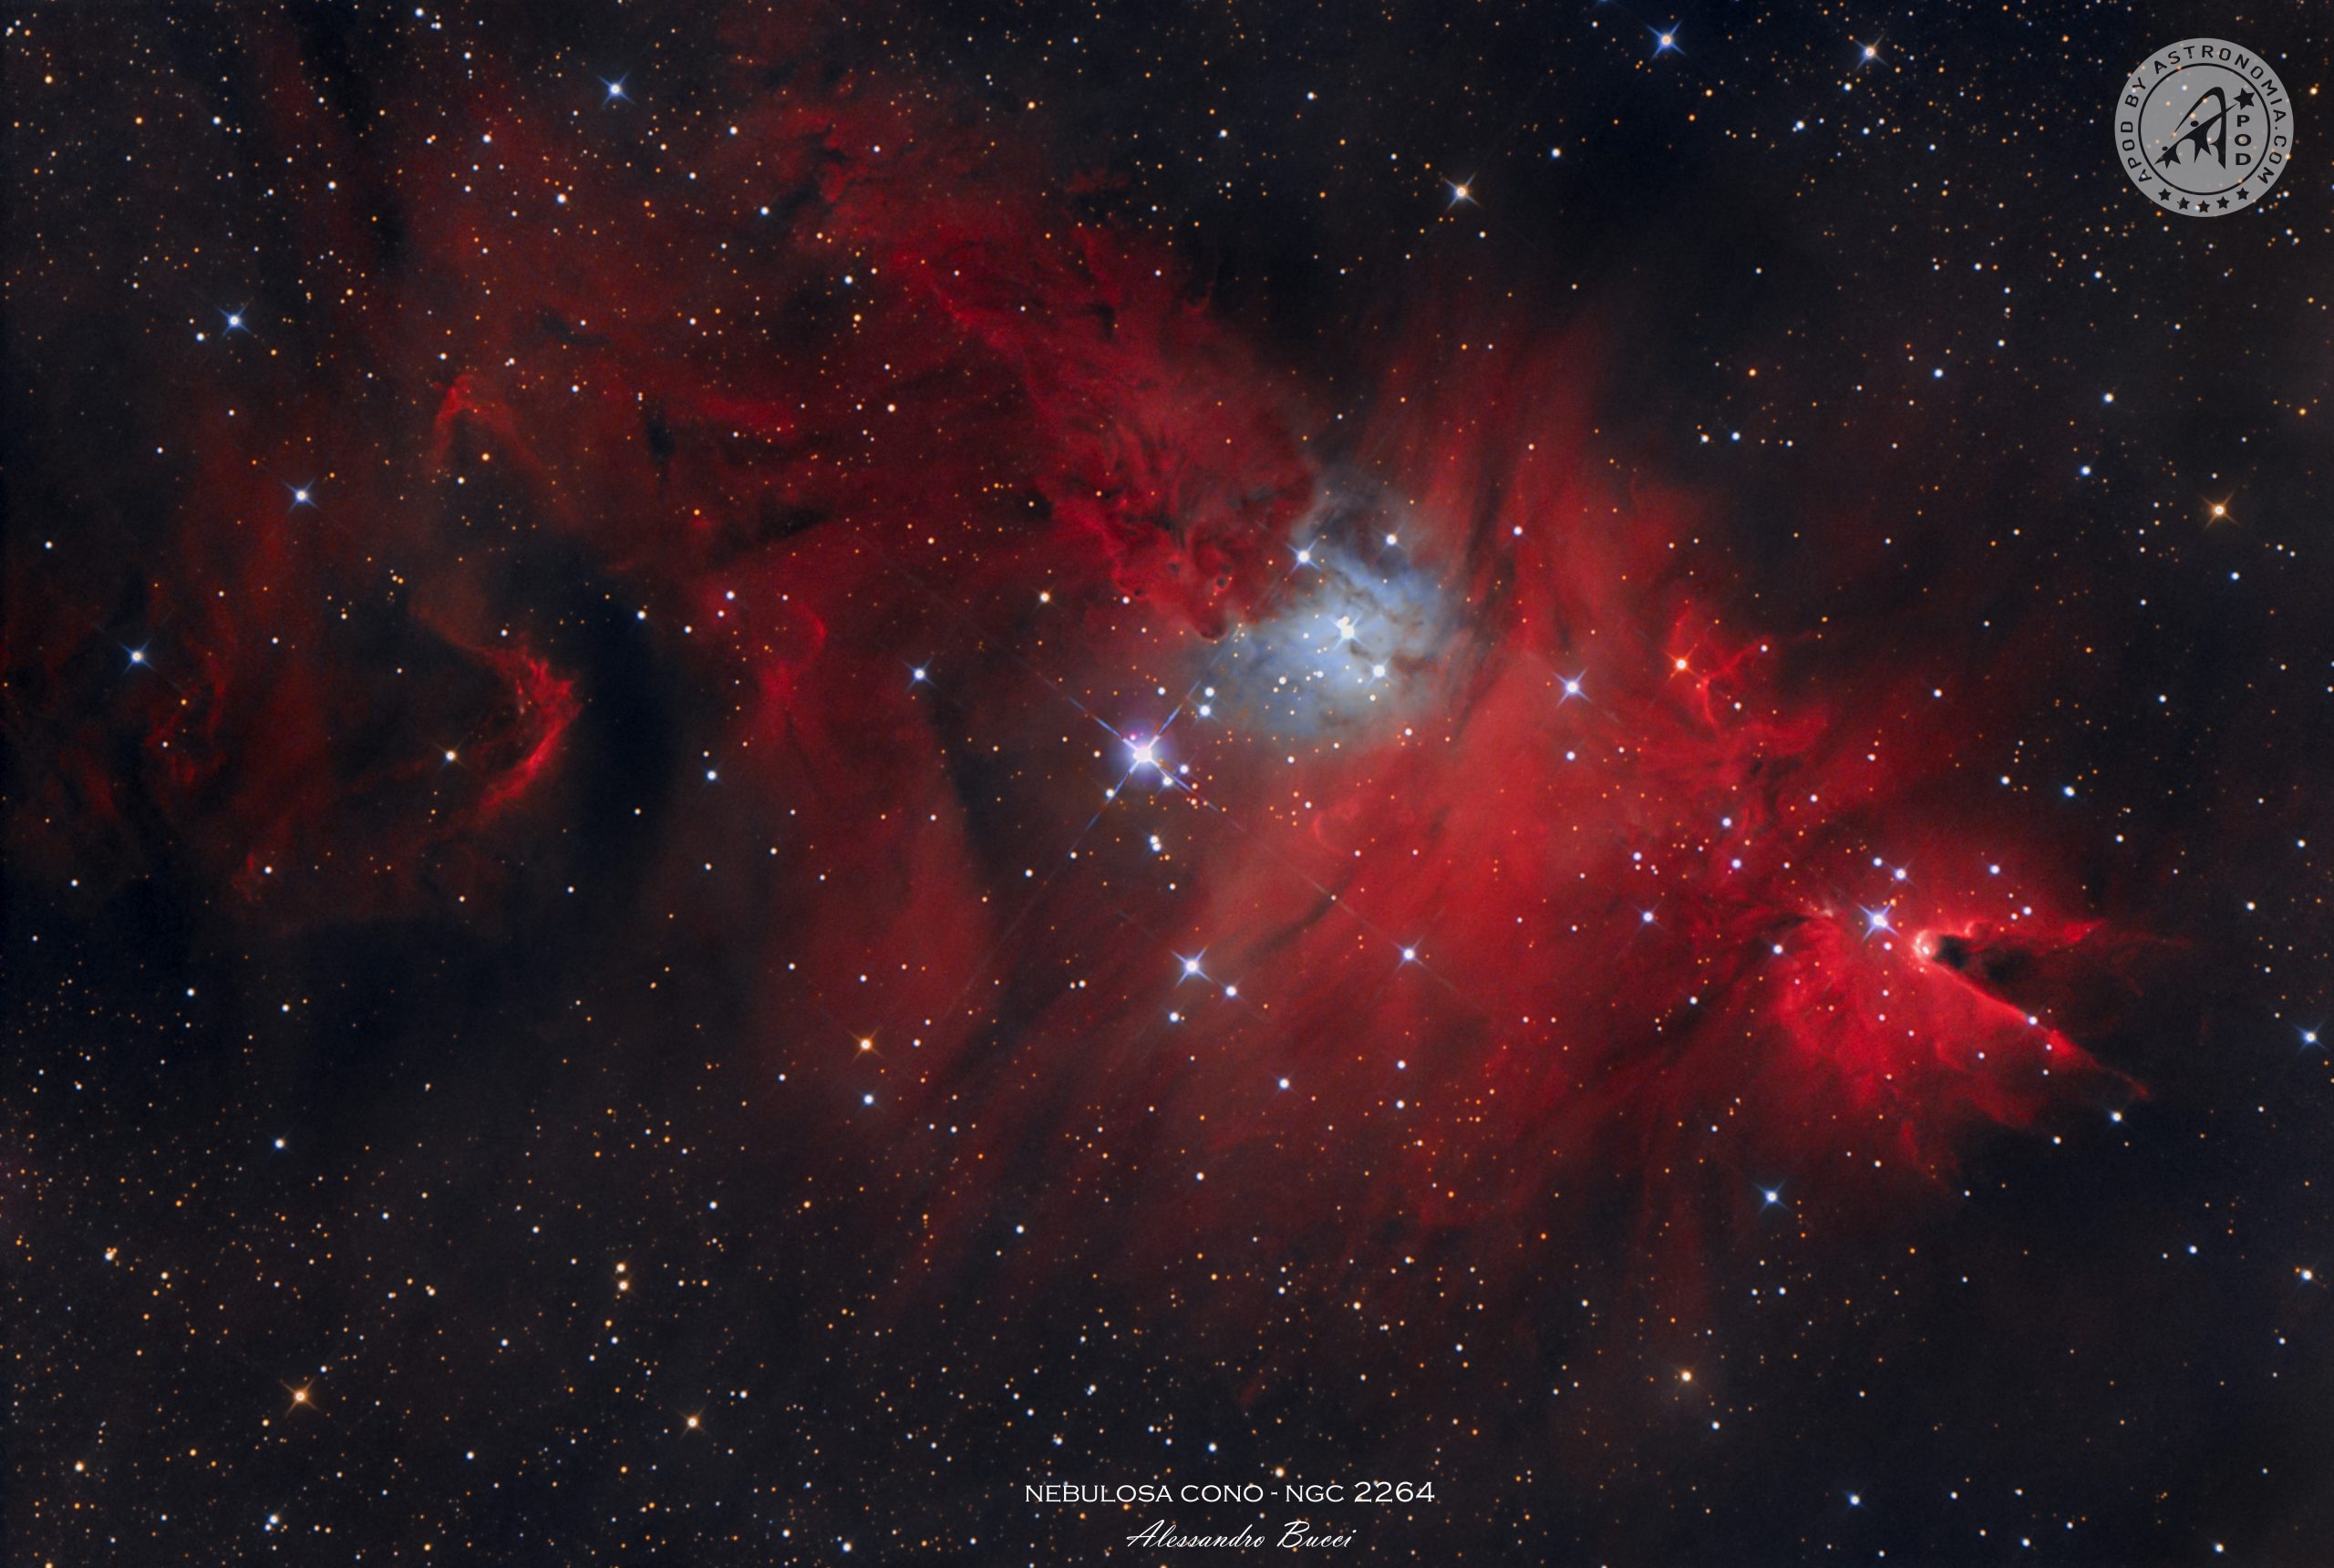 Nebulosa Cono – NGC 2264